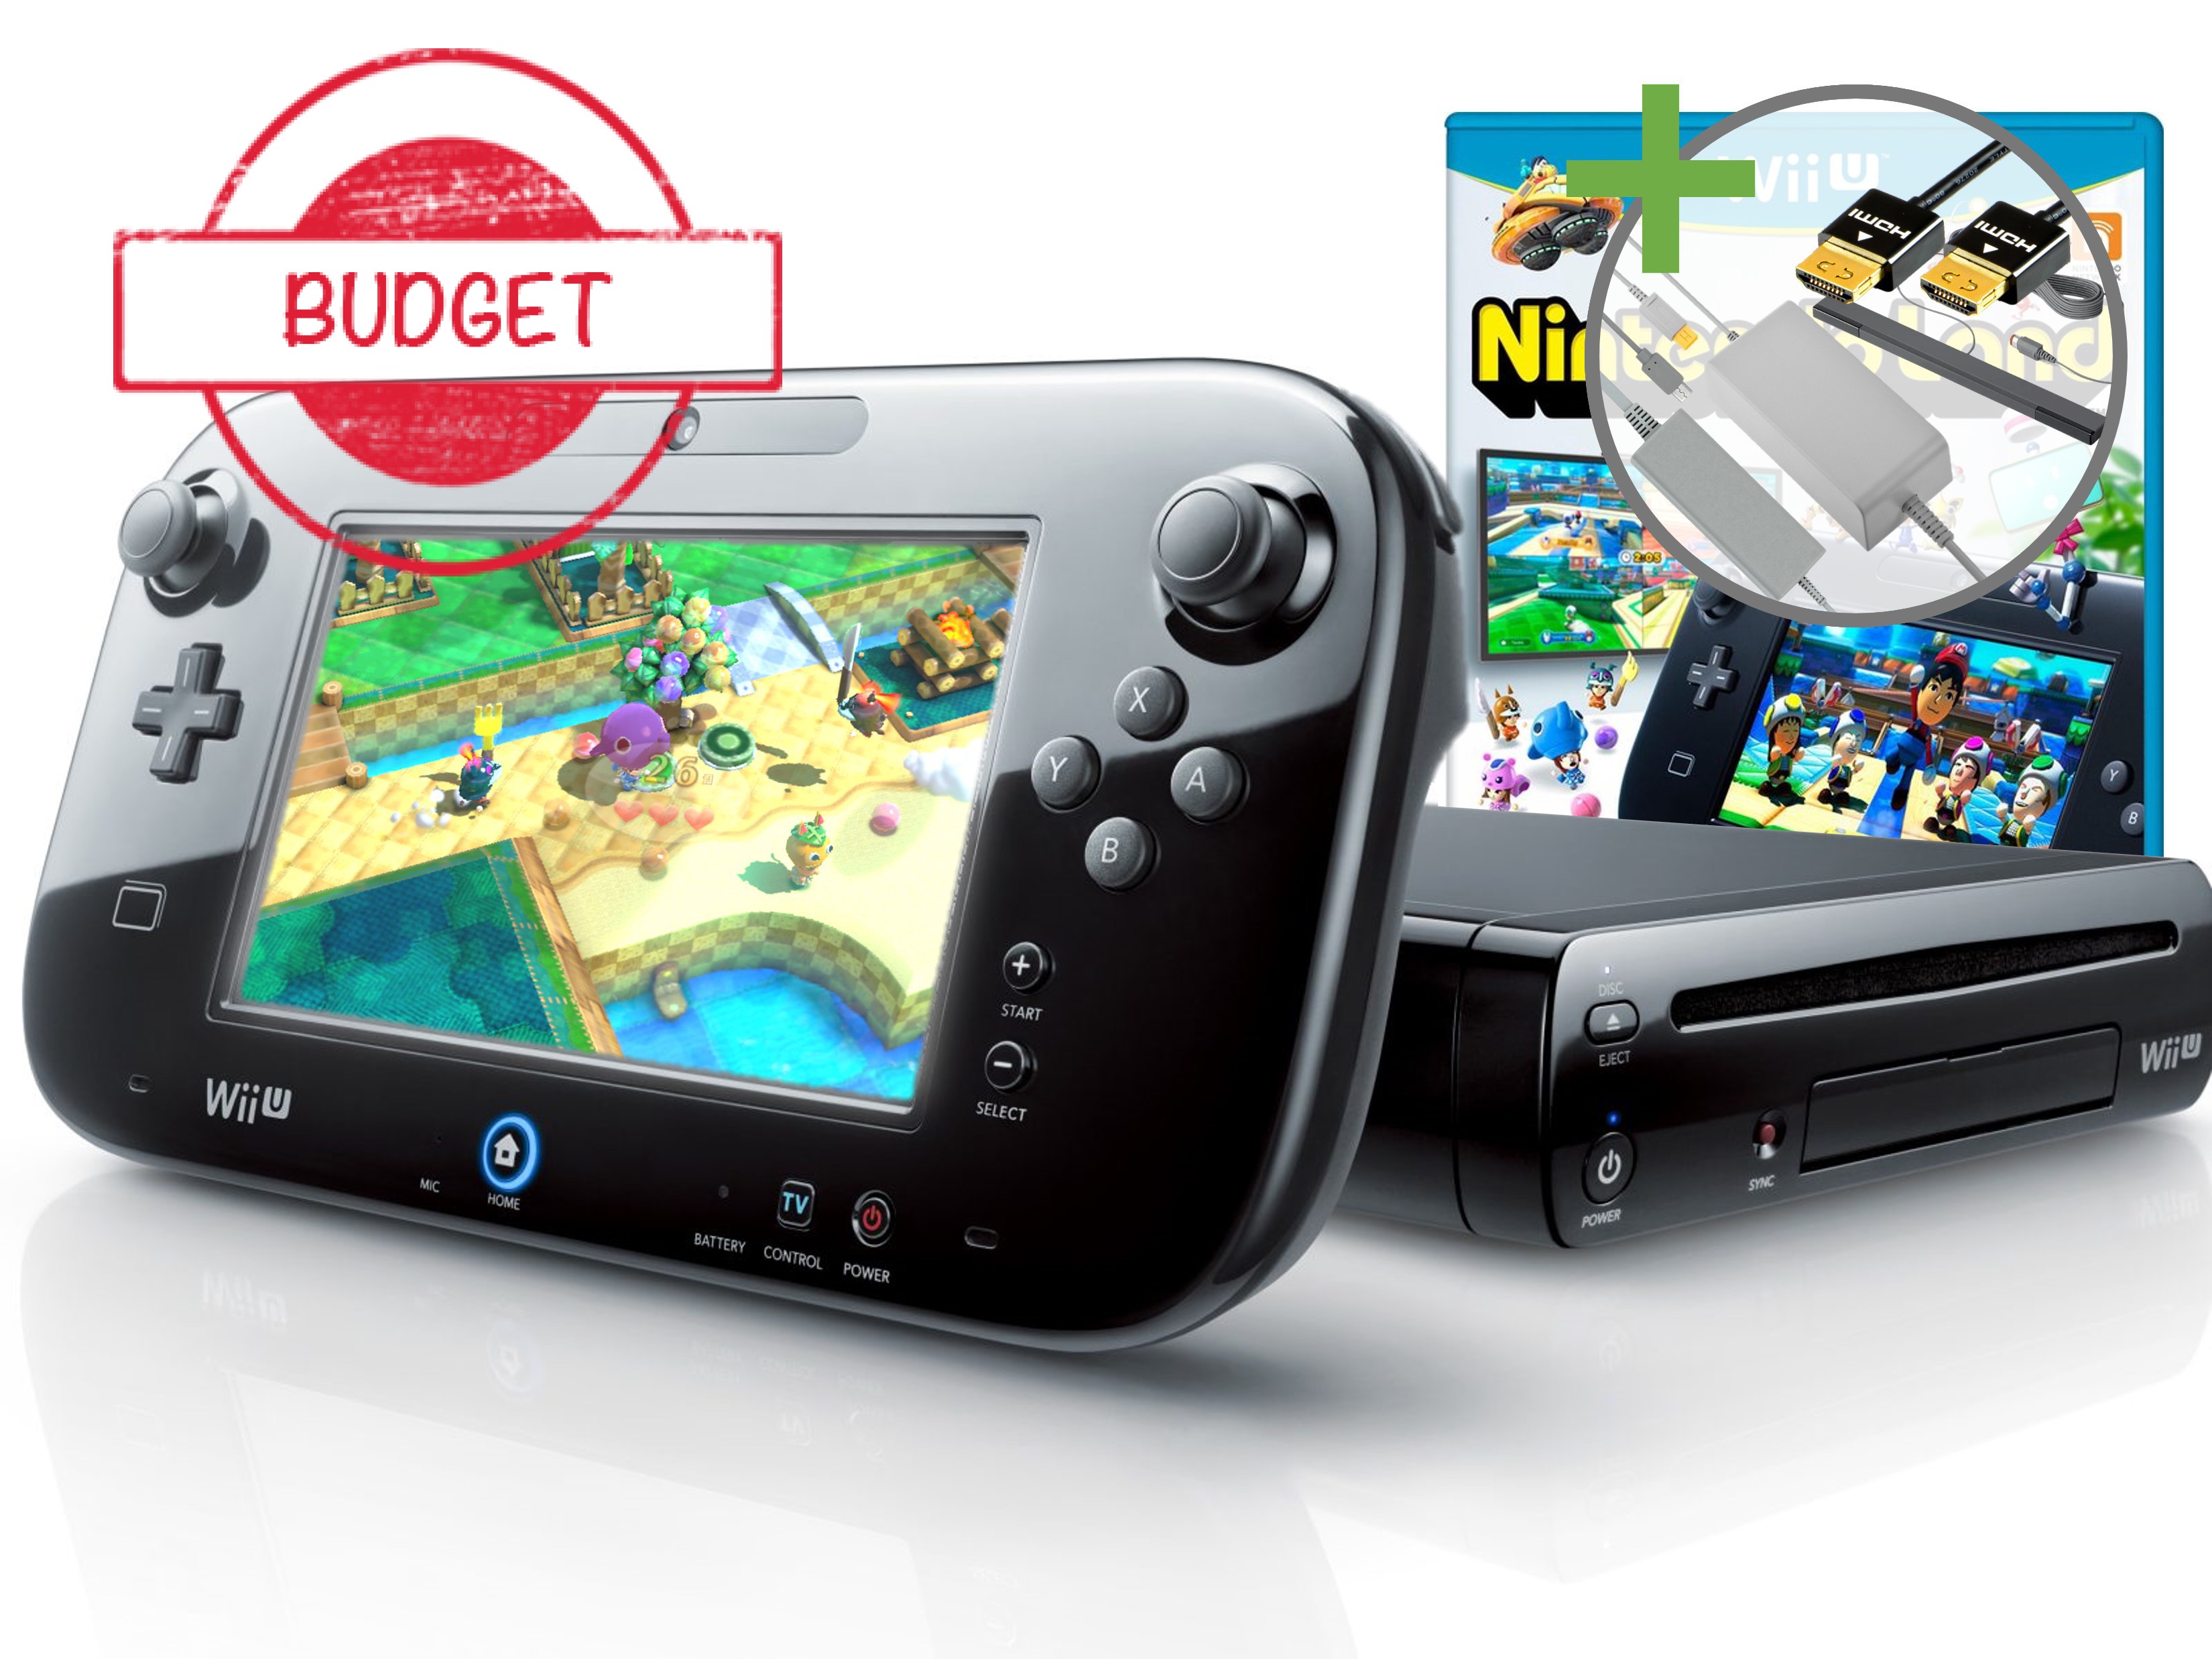 Nintendo Wii U Starter Pack - Deluxe Set Edition - Budget - Wii U Hardware